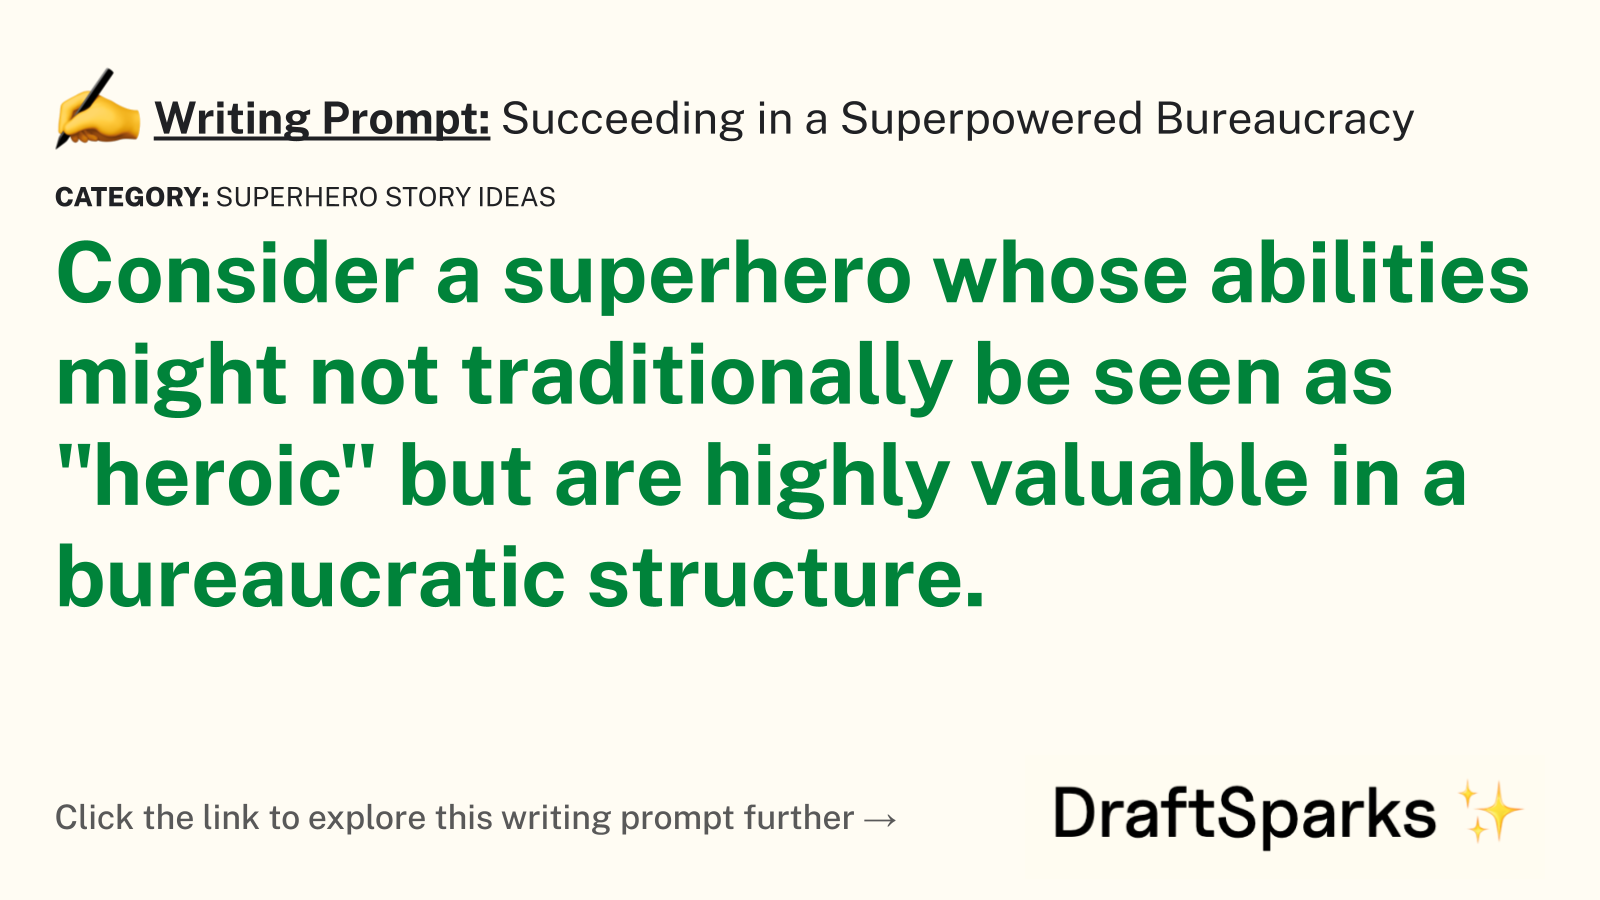 Succeeding in a Superpowered Bureaucracy